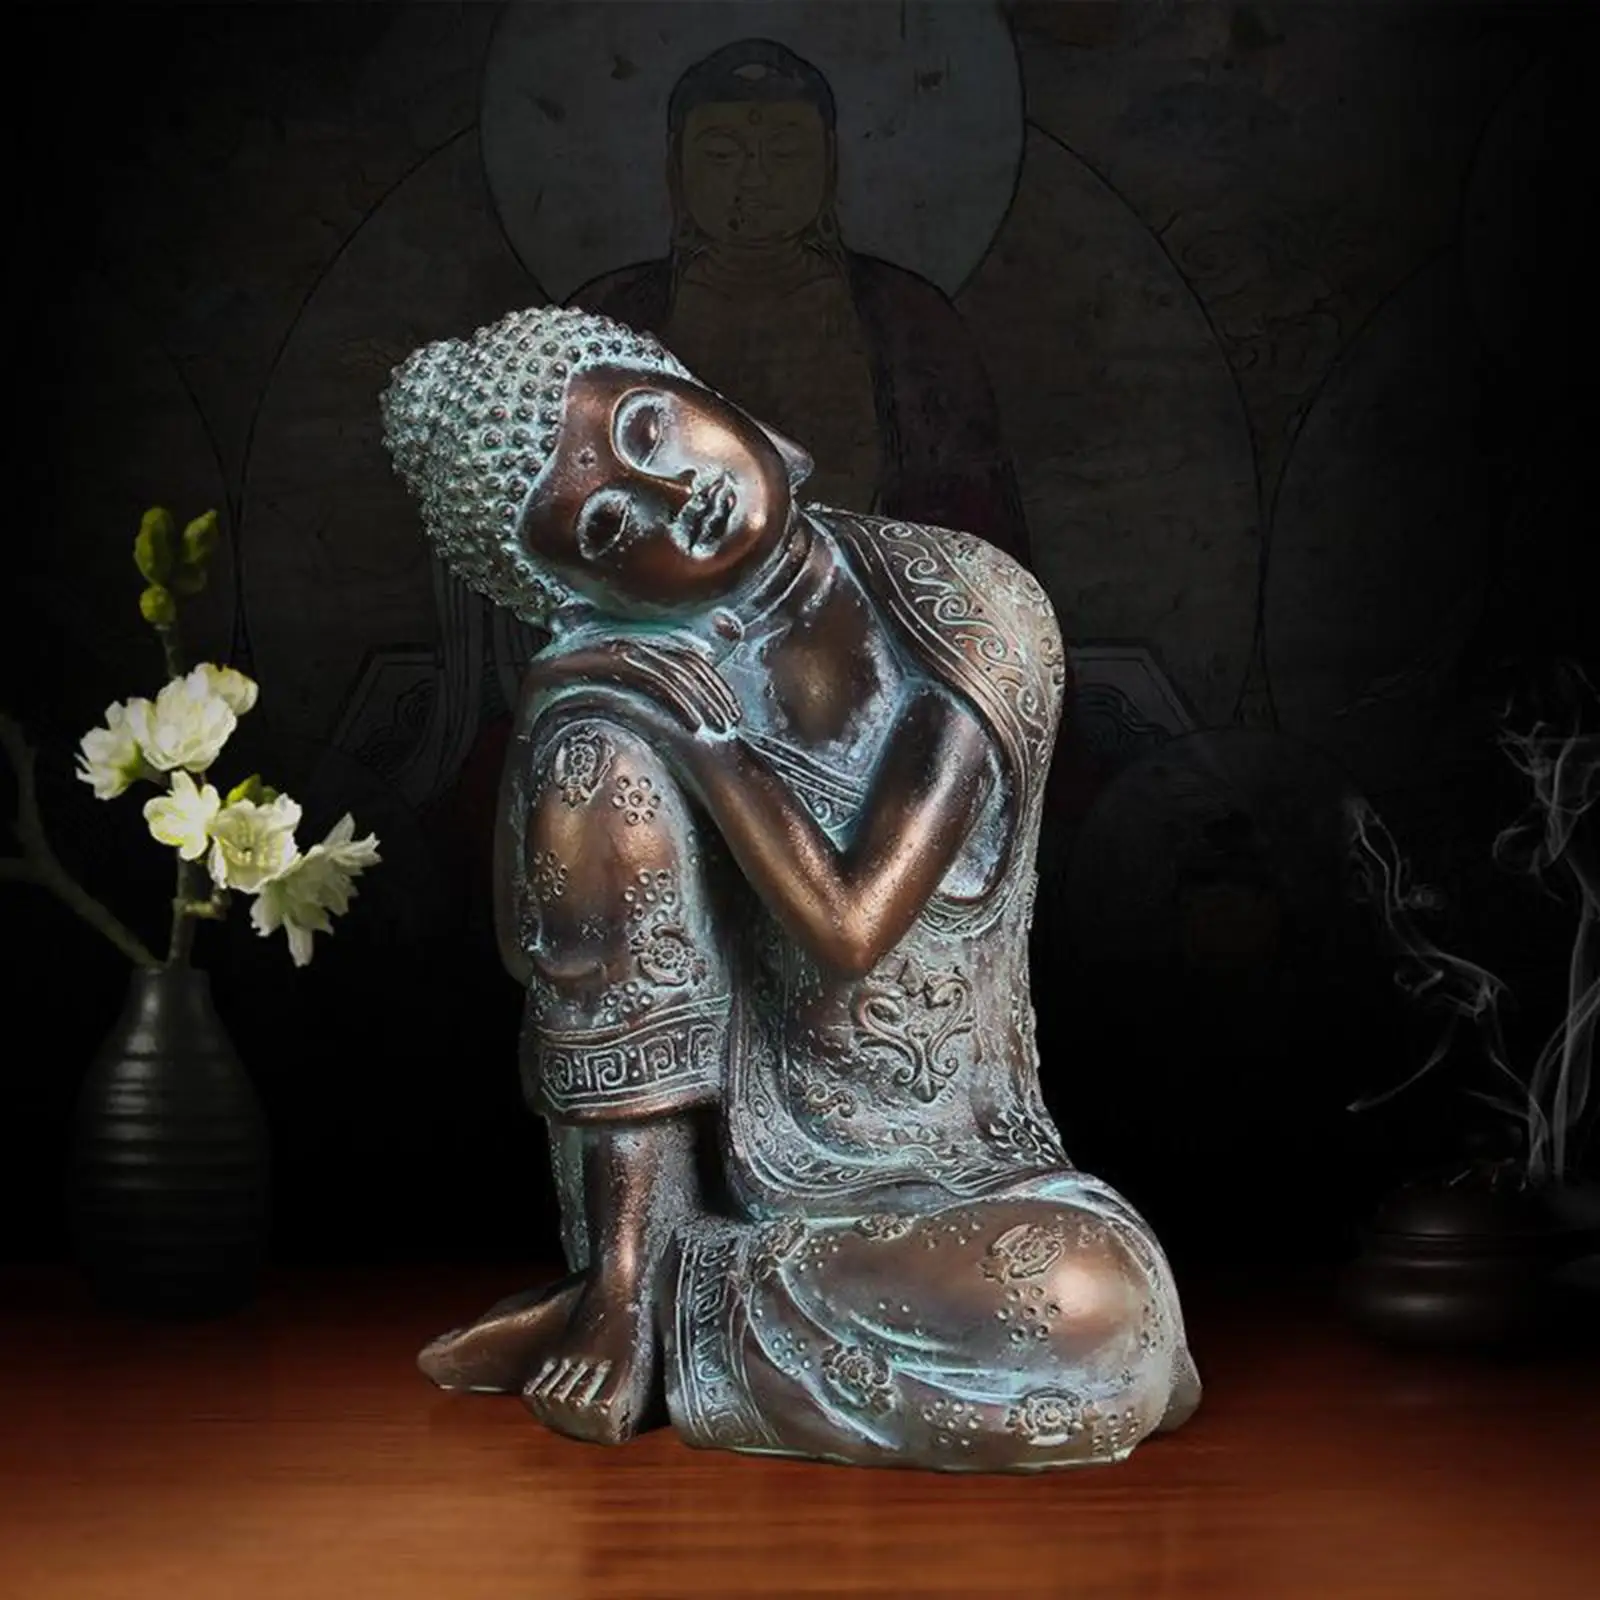 23cm Resin White Sleeping Buddha Statue Crafts Living Room Home Decor bring good luck and auspiciousness